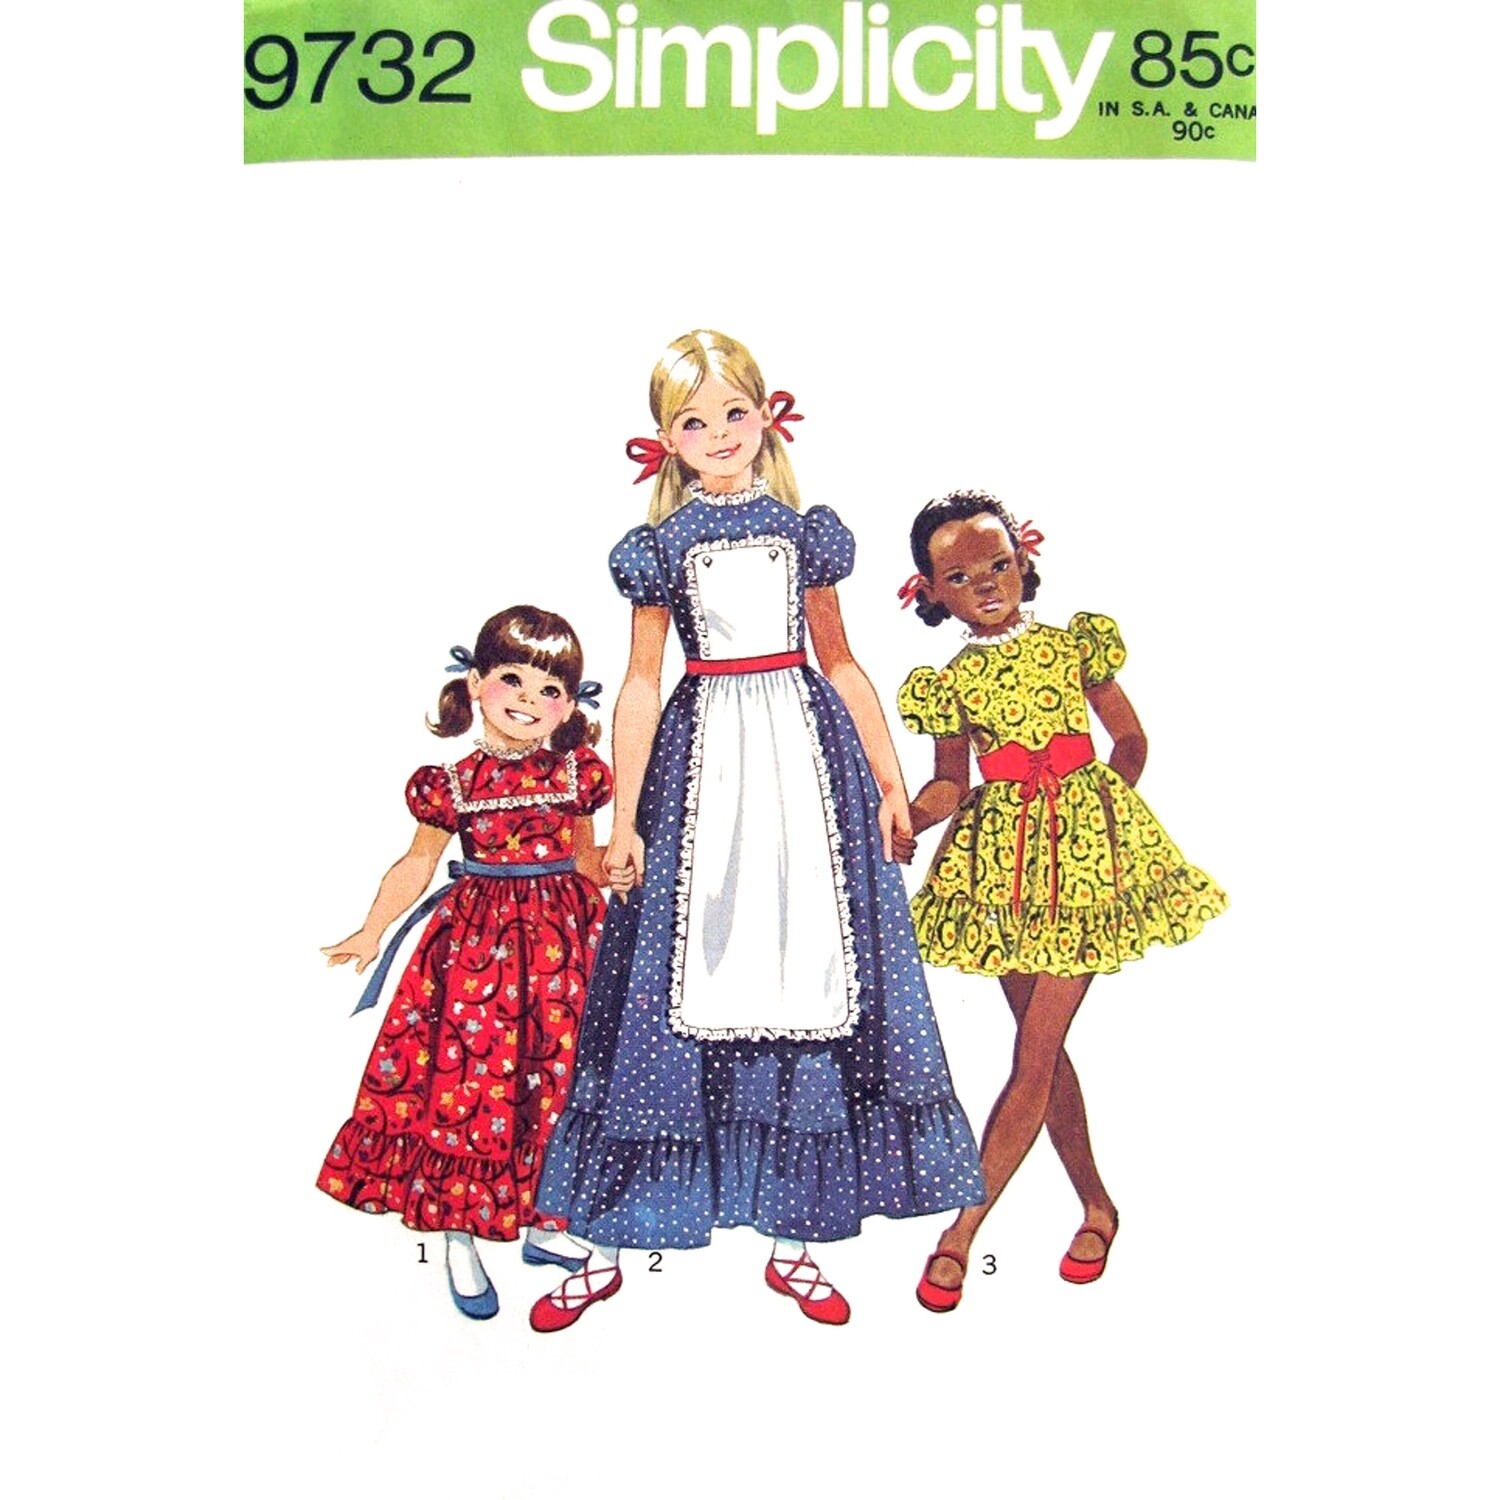 Simplicity 9732 pattern